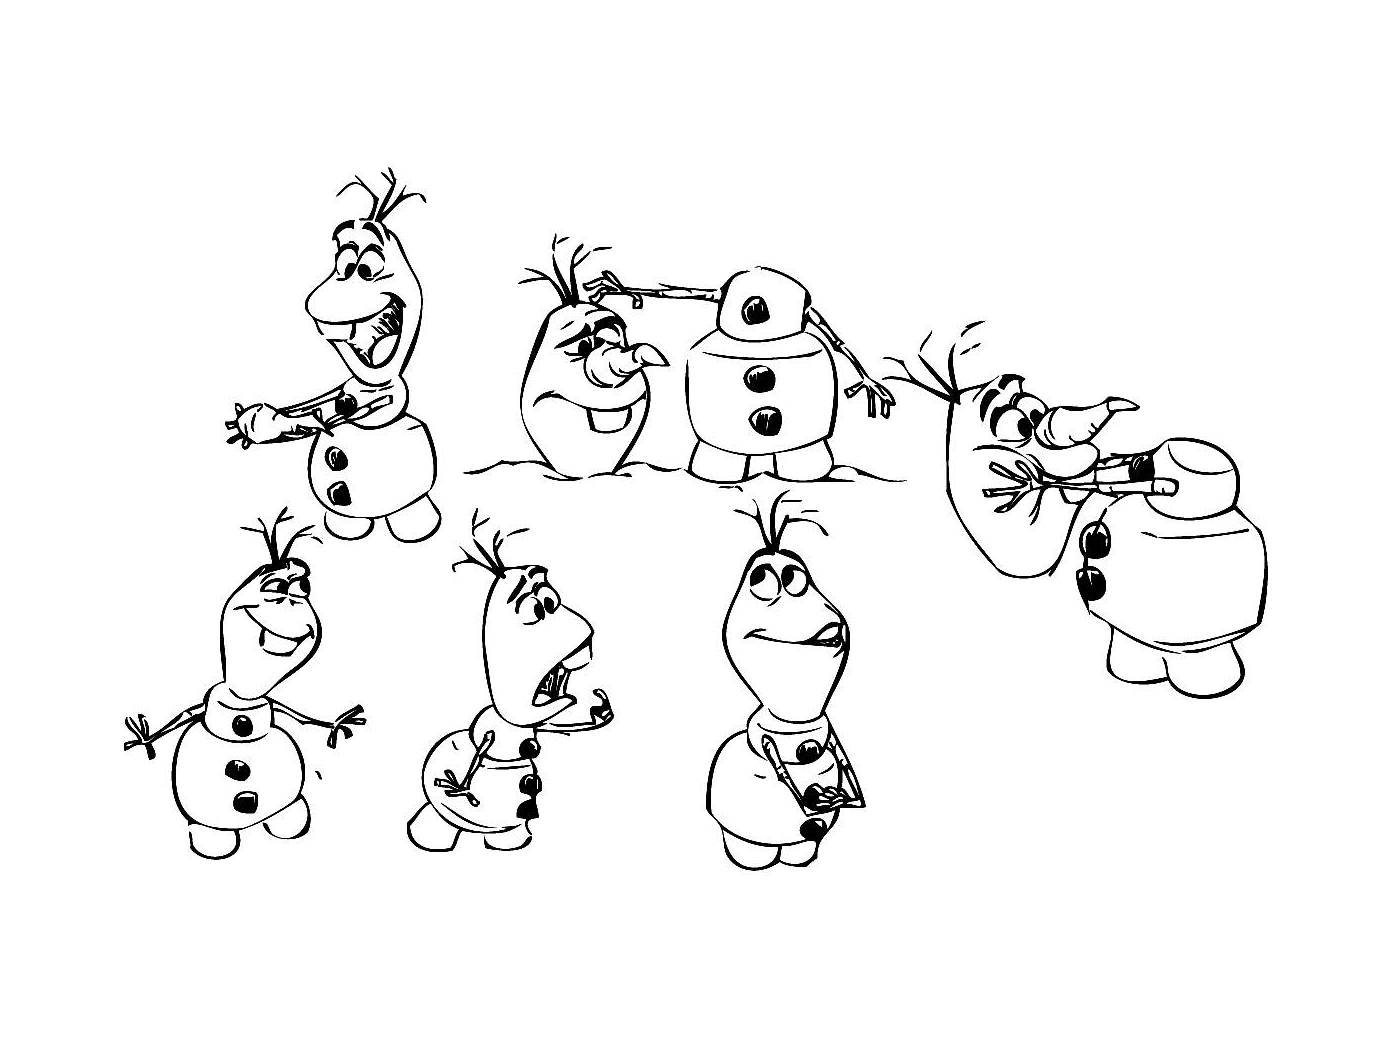   Olaf reine des dessins 